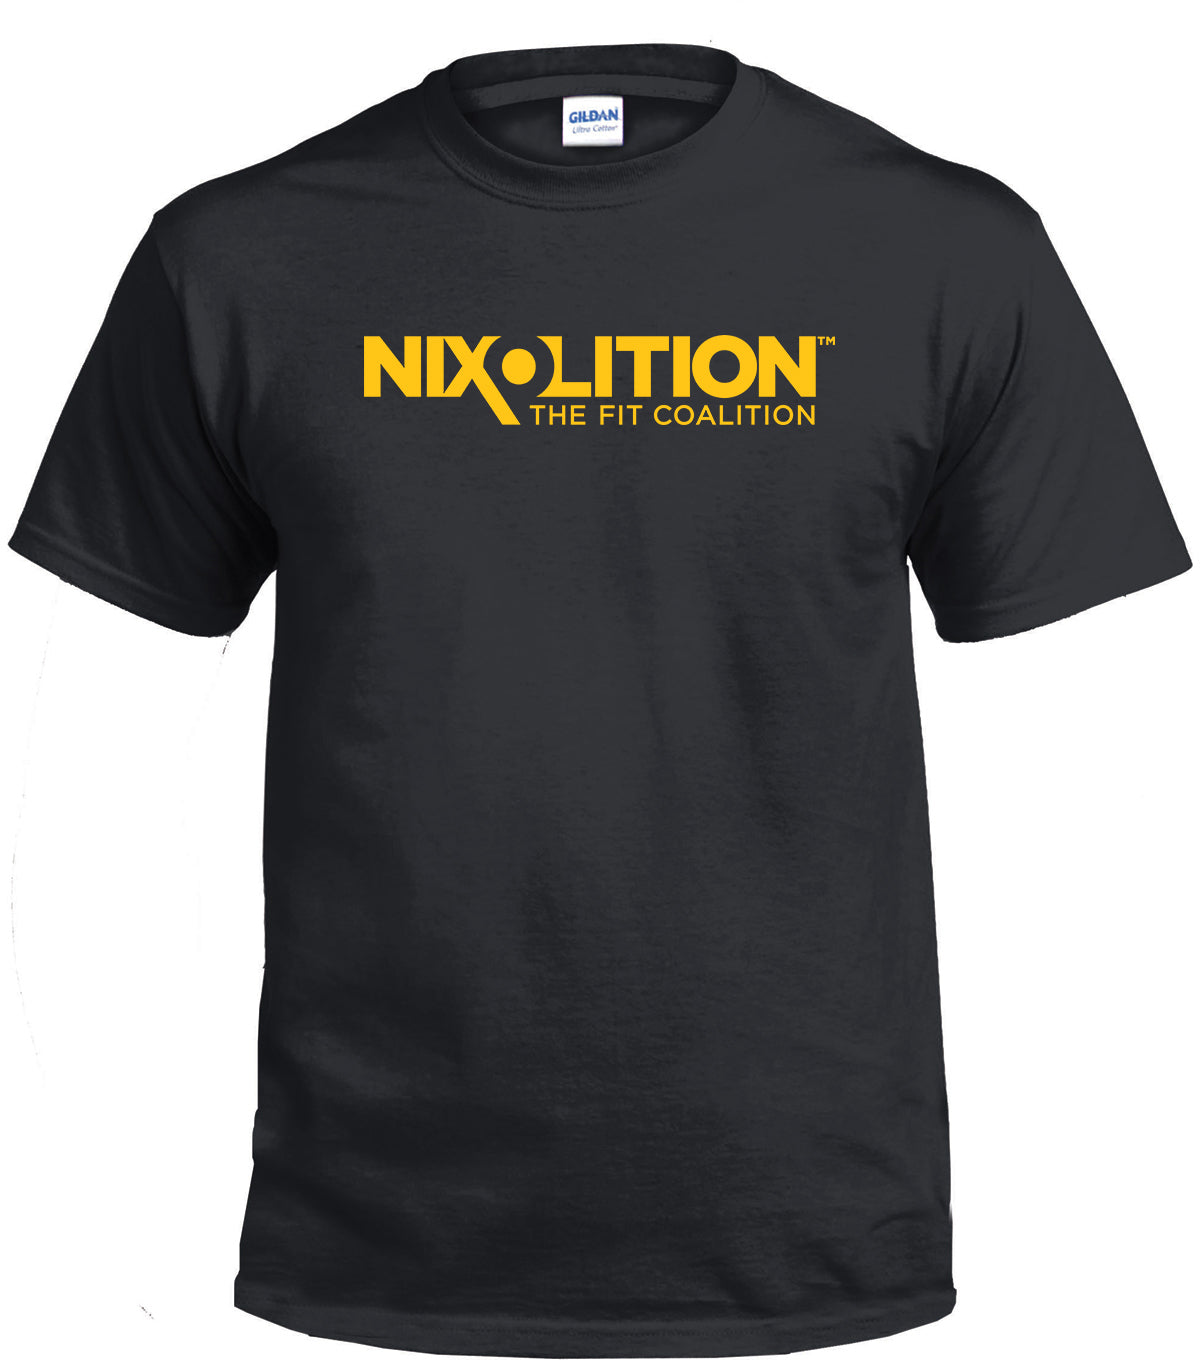 Nixolition T-Shirt Men's Black